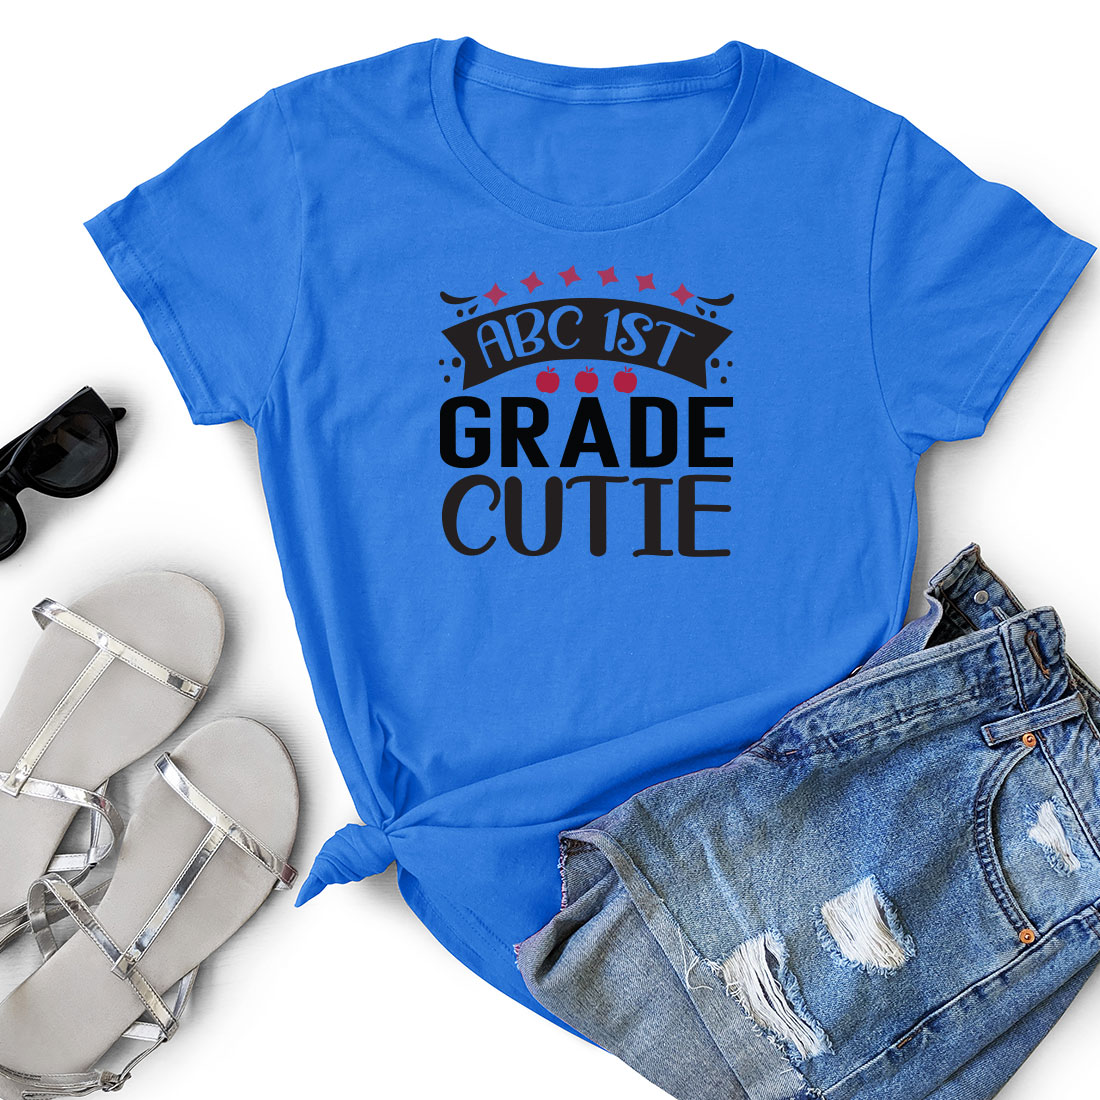 Blue shirt that says abc 1st grade cutie.